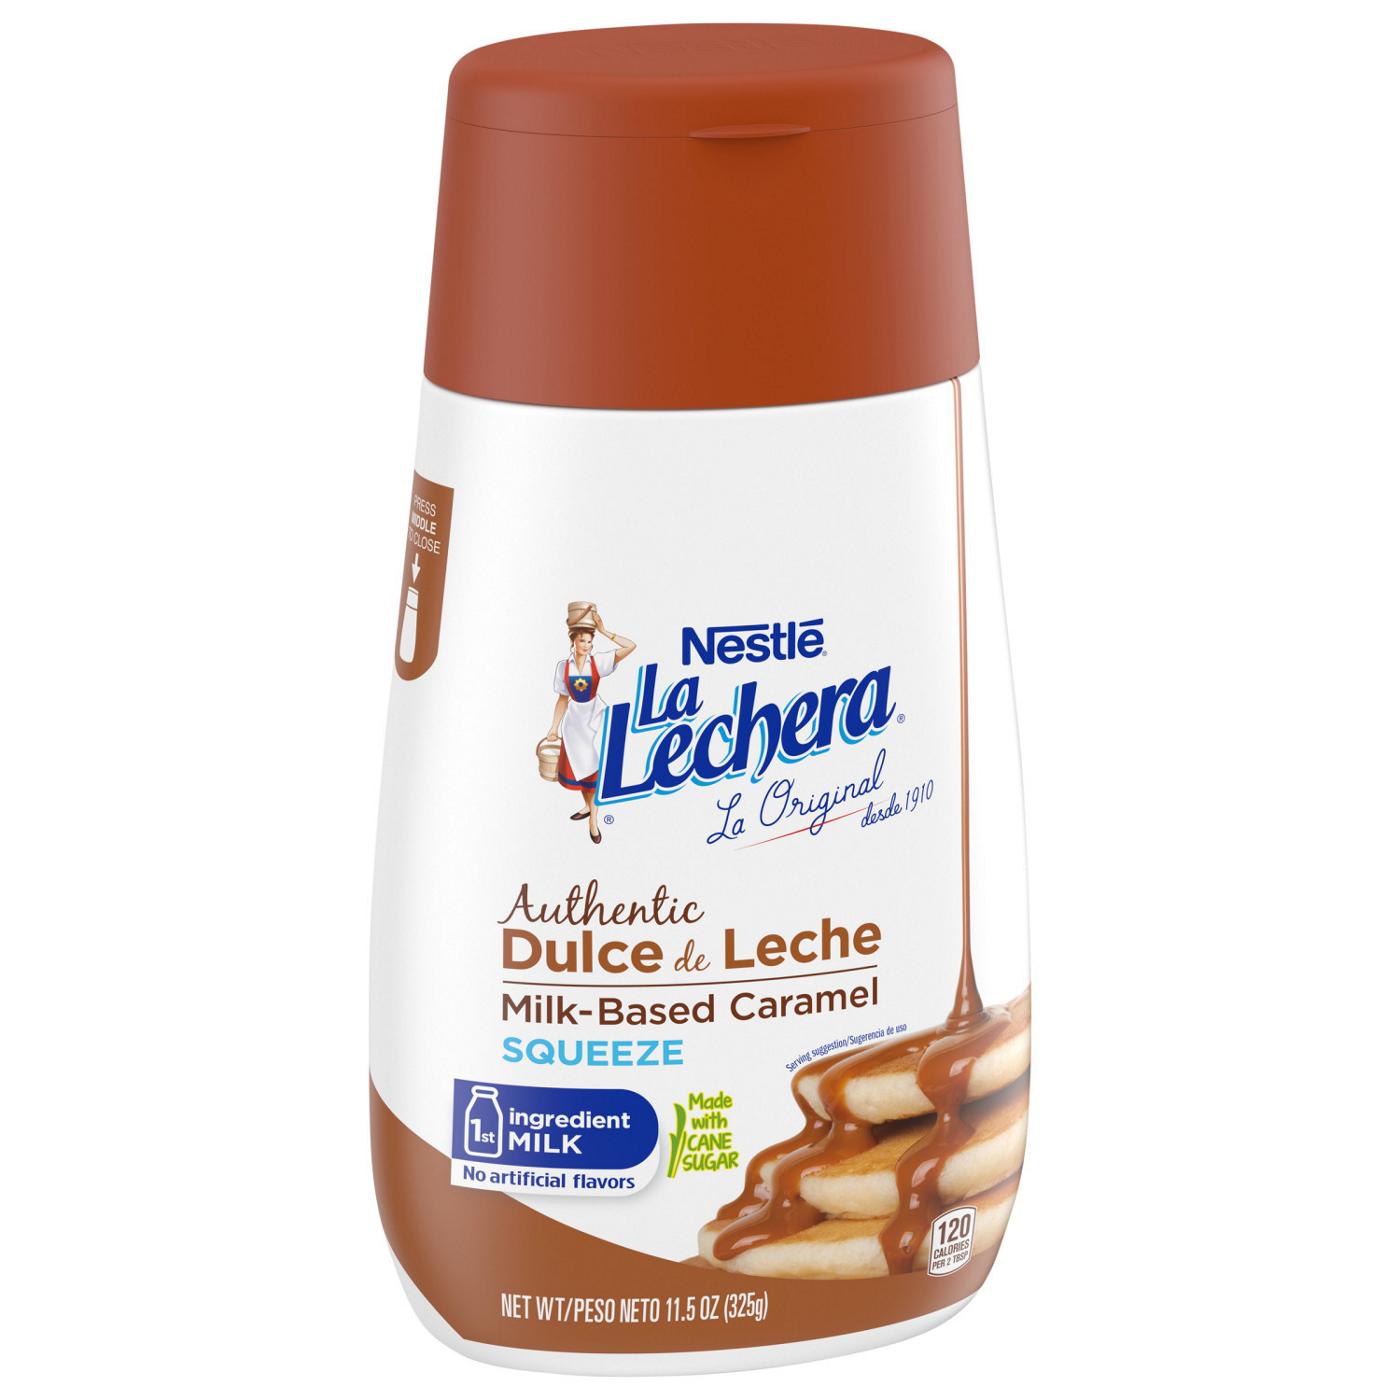 Nestle La Lechera Authentic Dulce de Leche Milk-Based Caramel; image 2 of 2